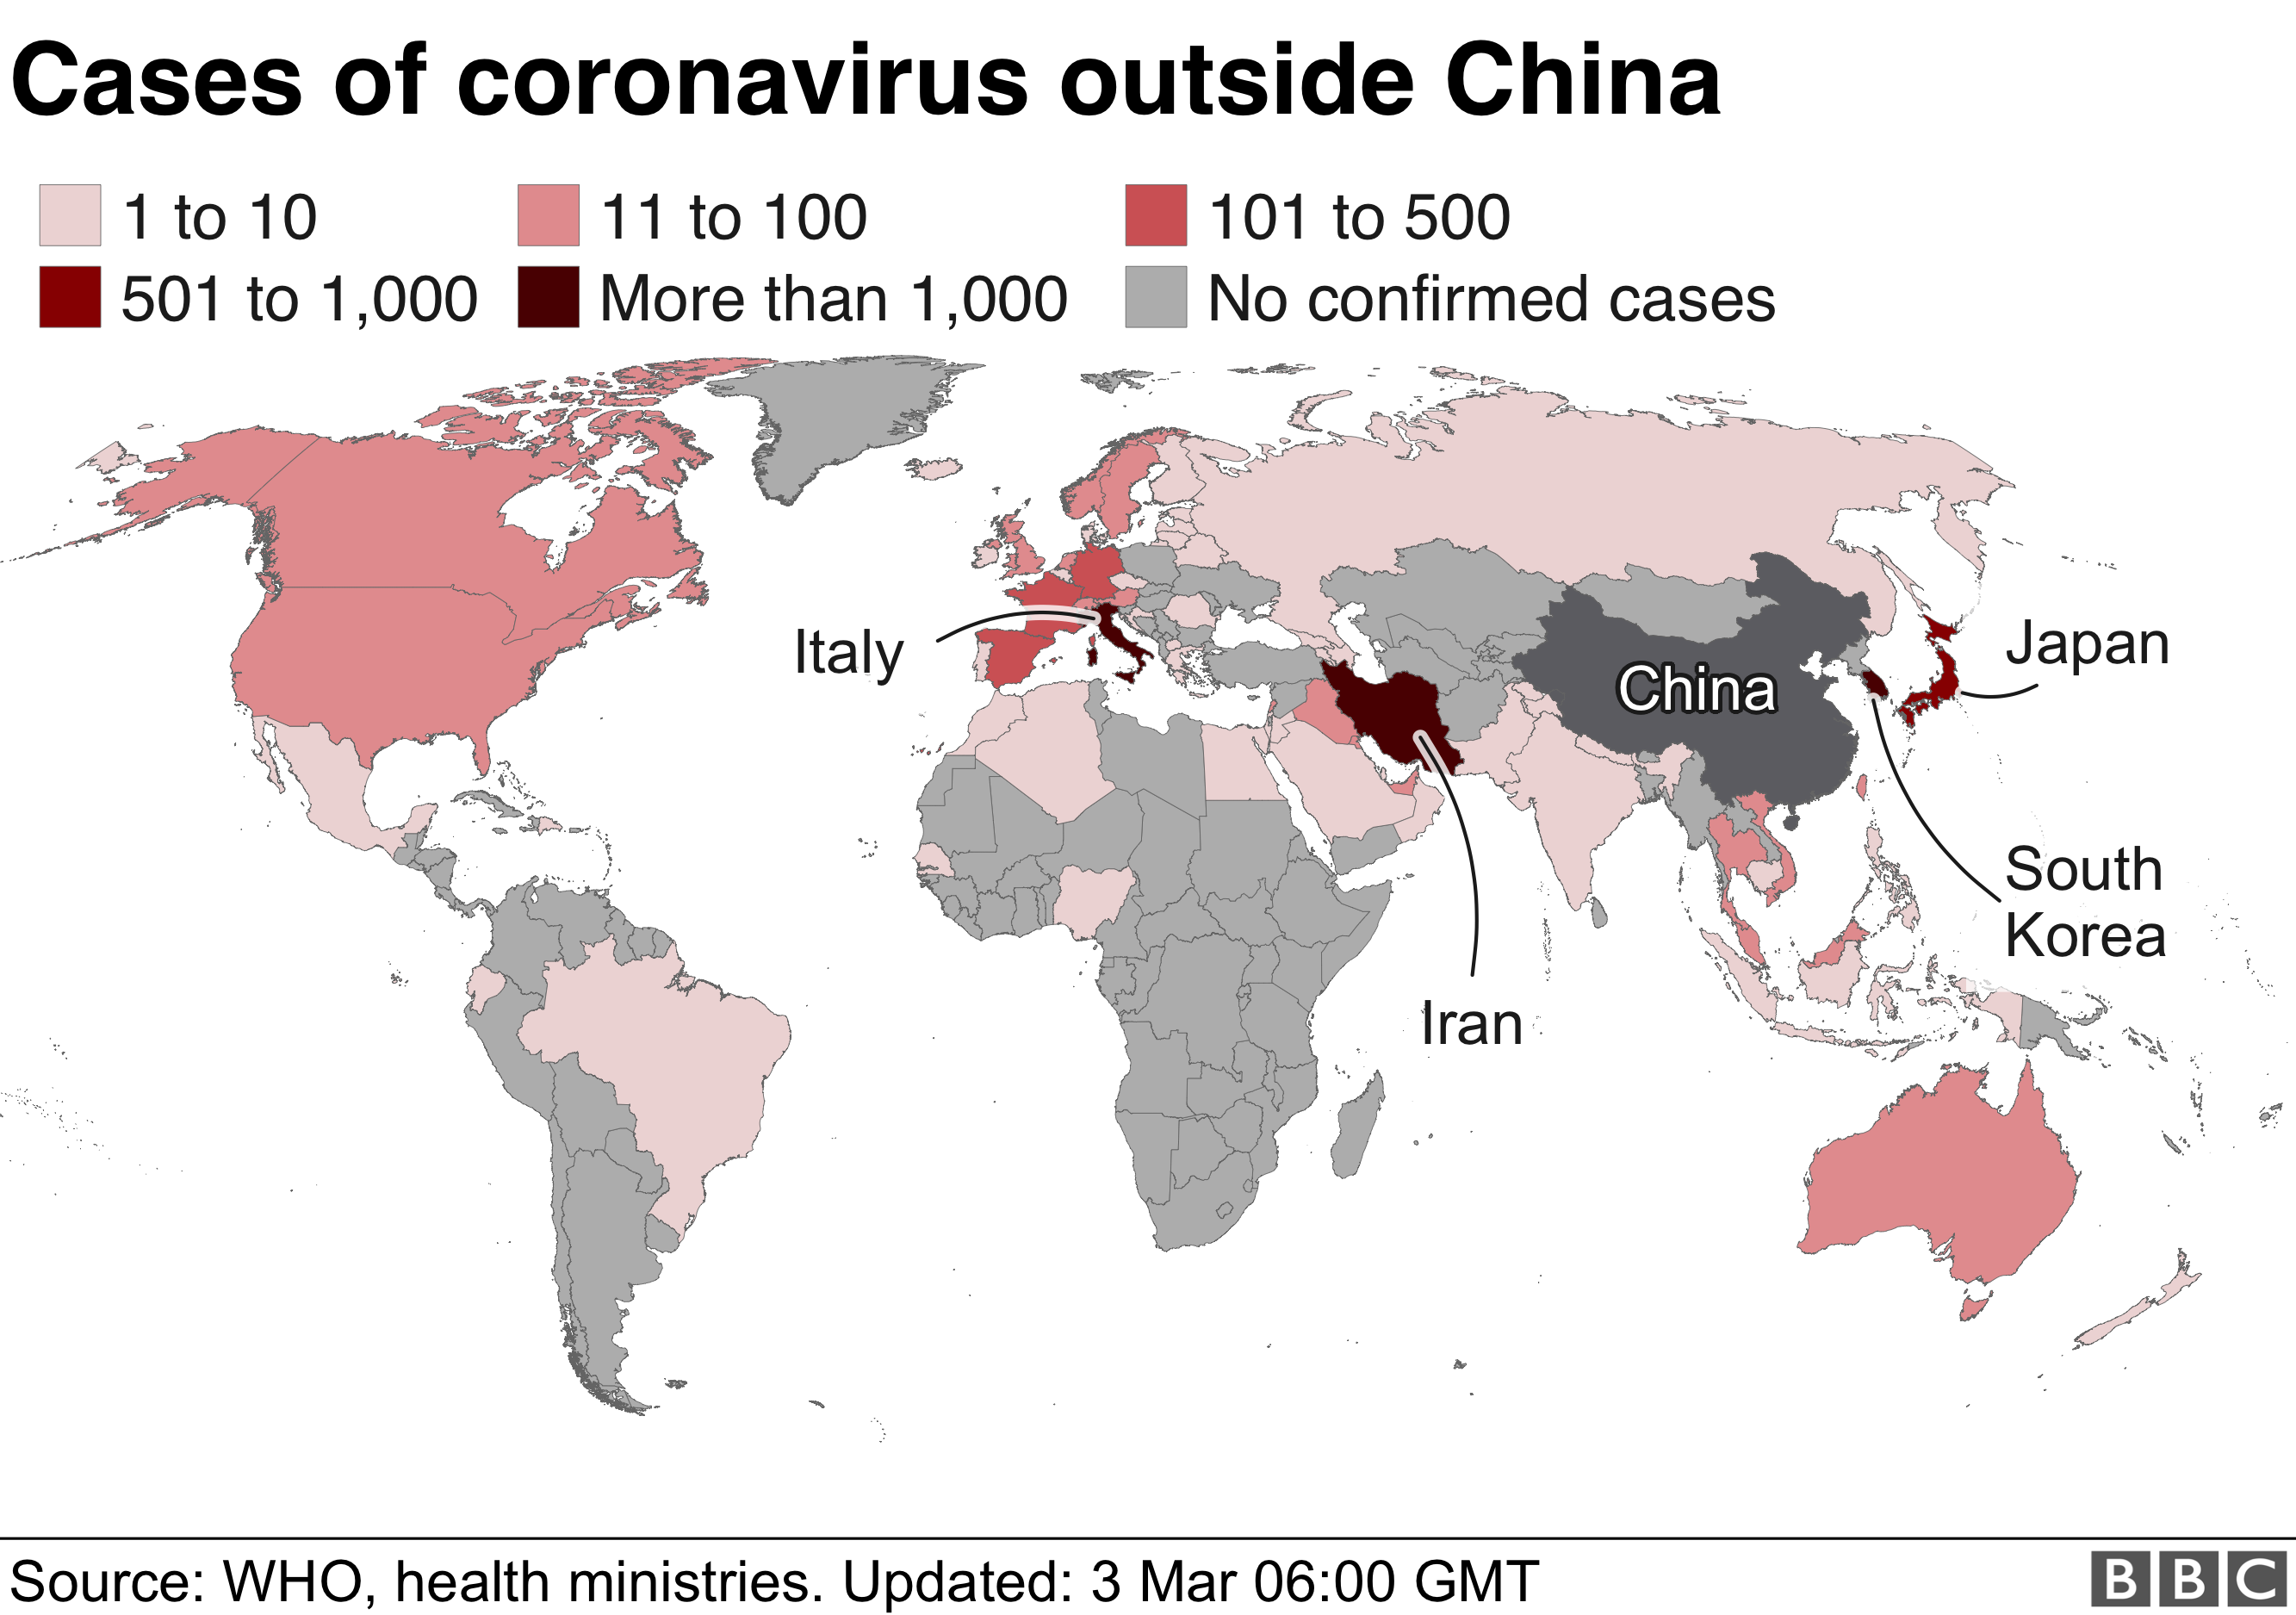  Coronavirus World Bank Pledges 12bn in Emergency Aid